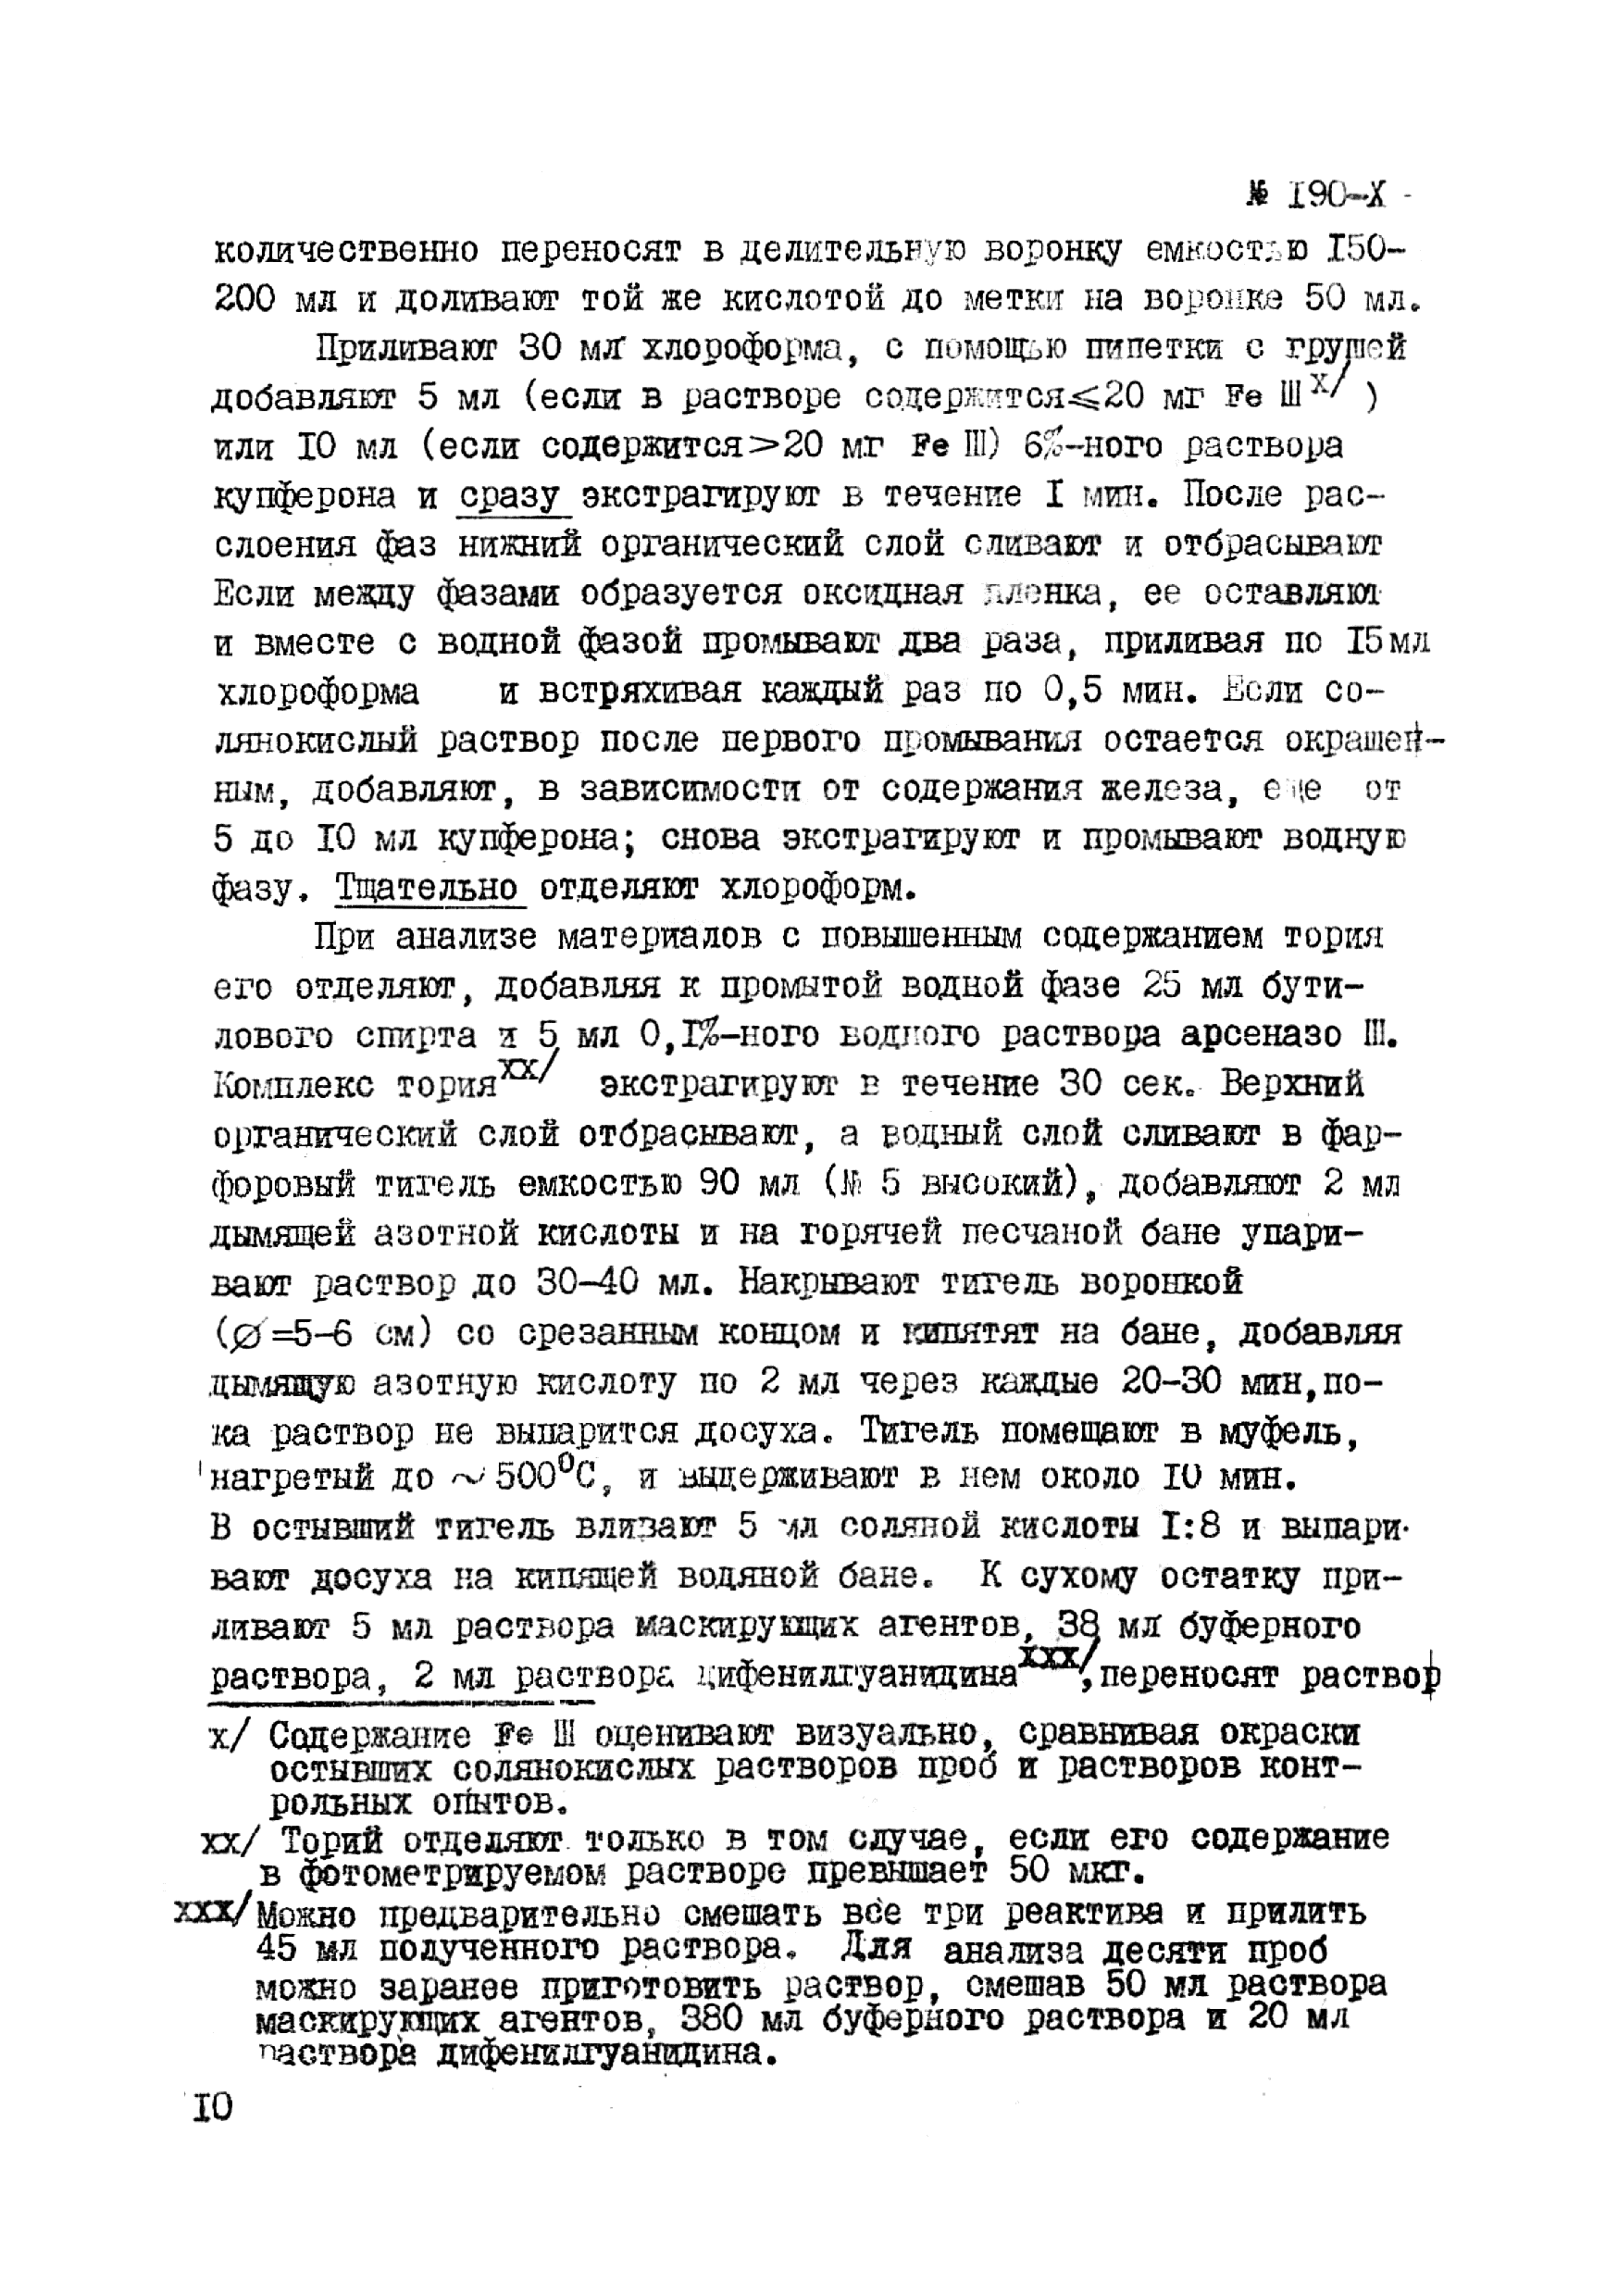 Инструкция НСАМ 190-Х